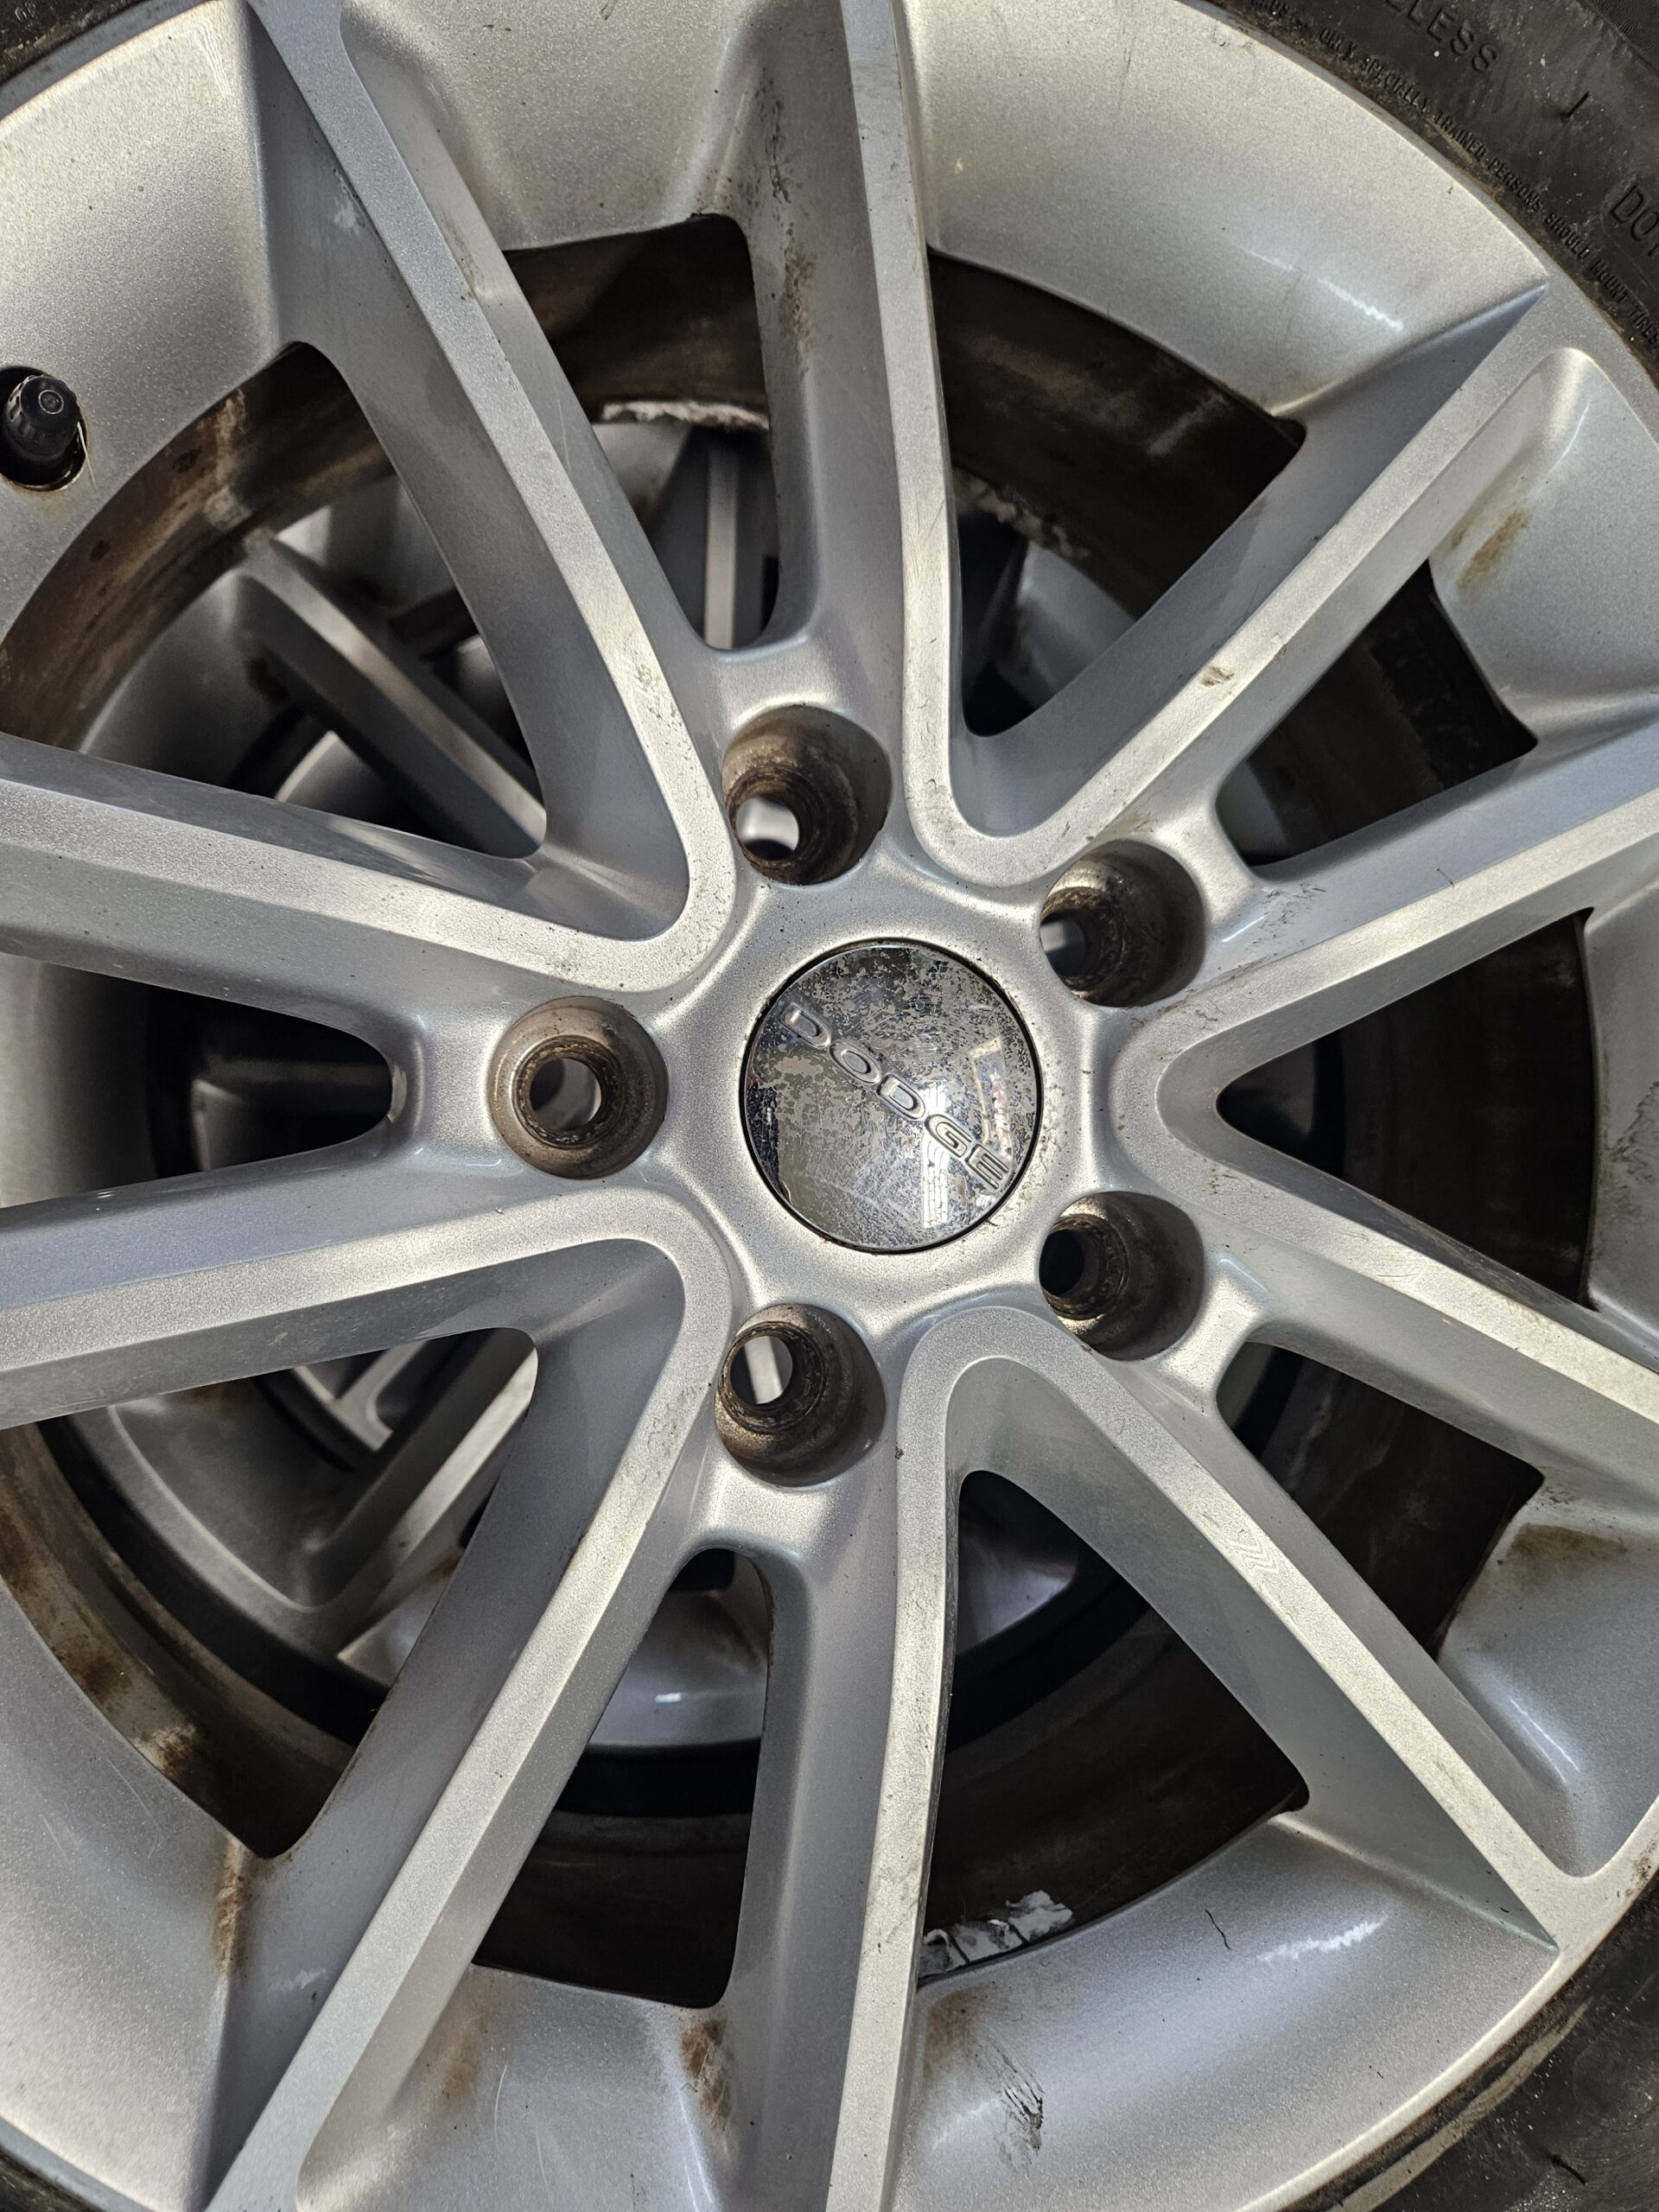 225/65R17 Michelin Snow Tires